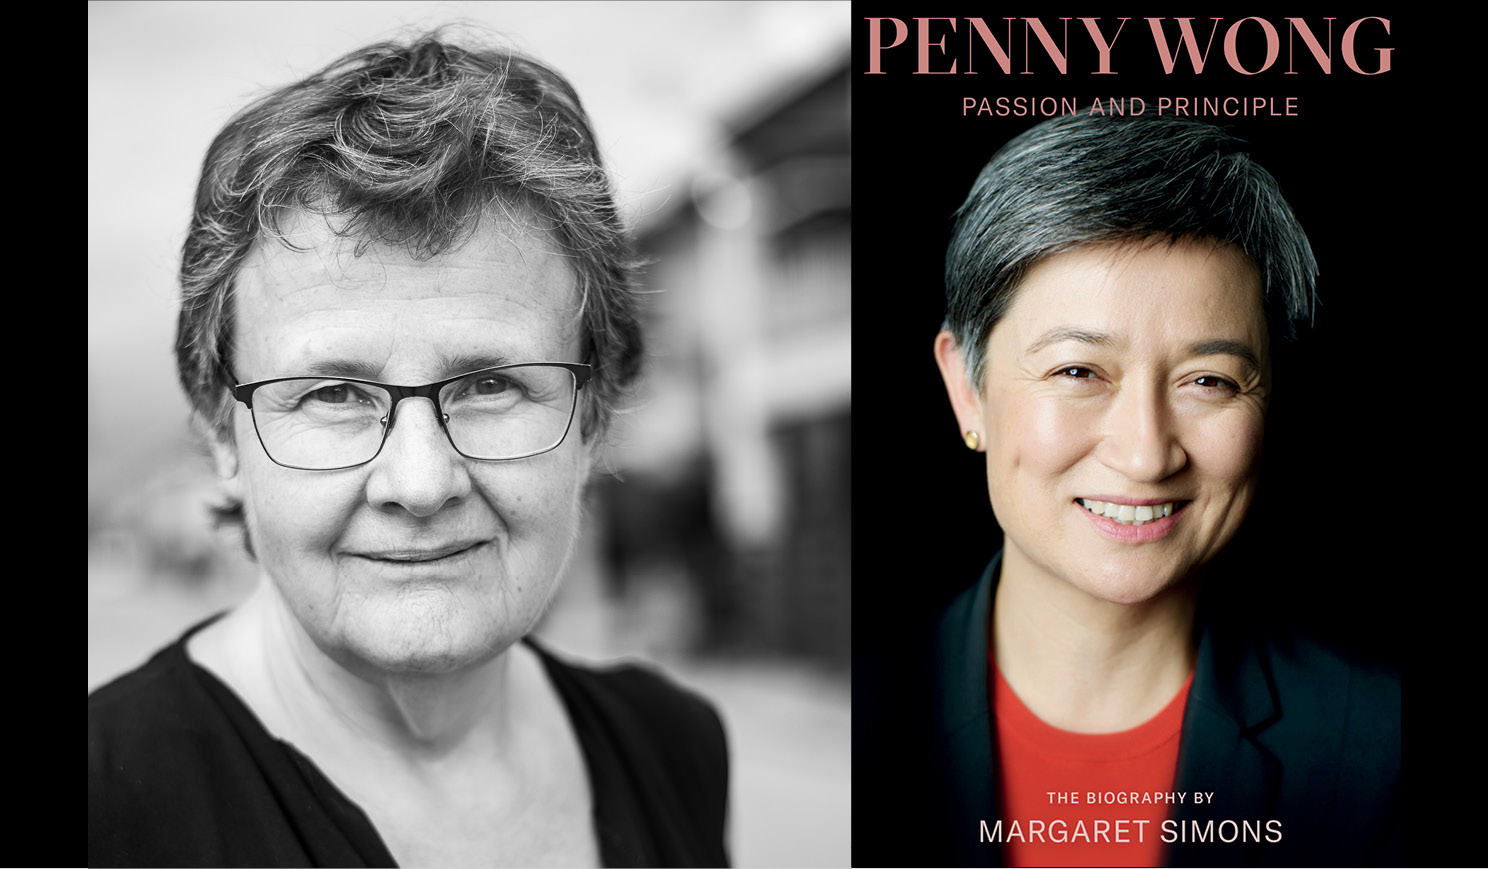 Margart Simons' headshot alongside the cover of her book about Senator Penny Wong